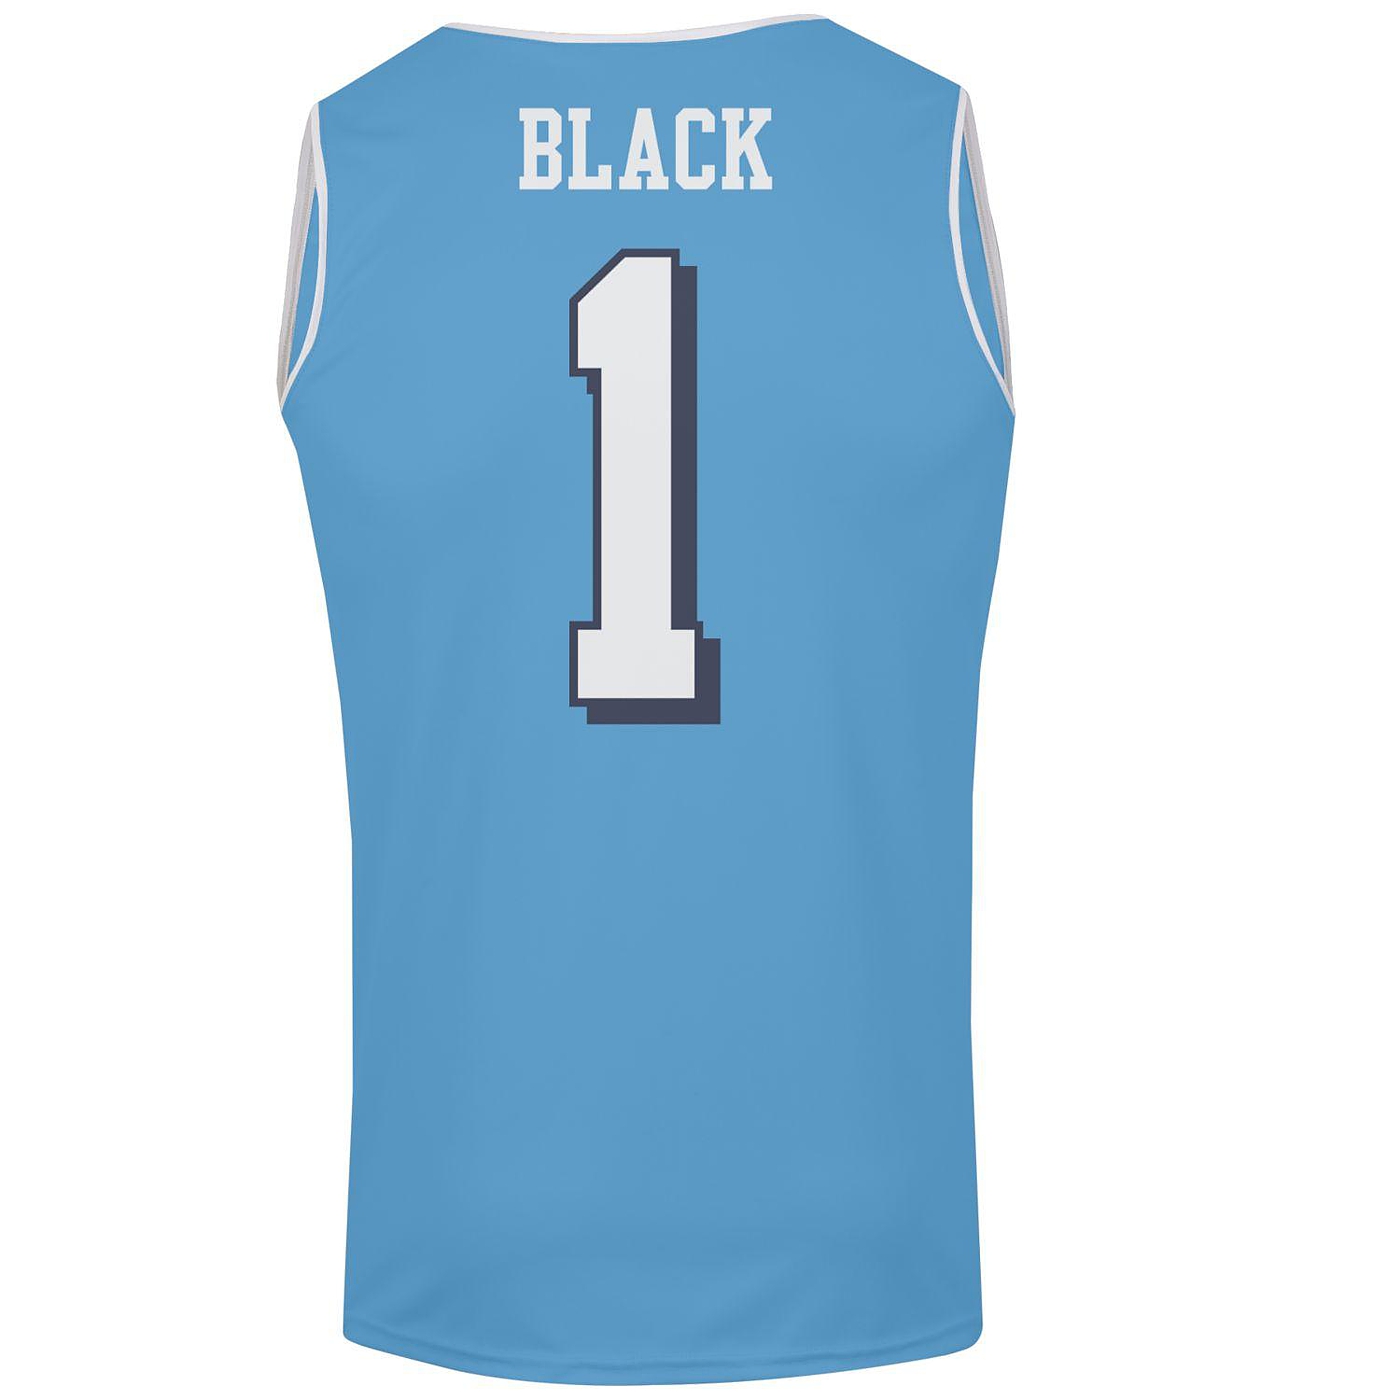 Johnny T-shirt - North Carolina Tar Heels - Leaky Black #1